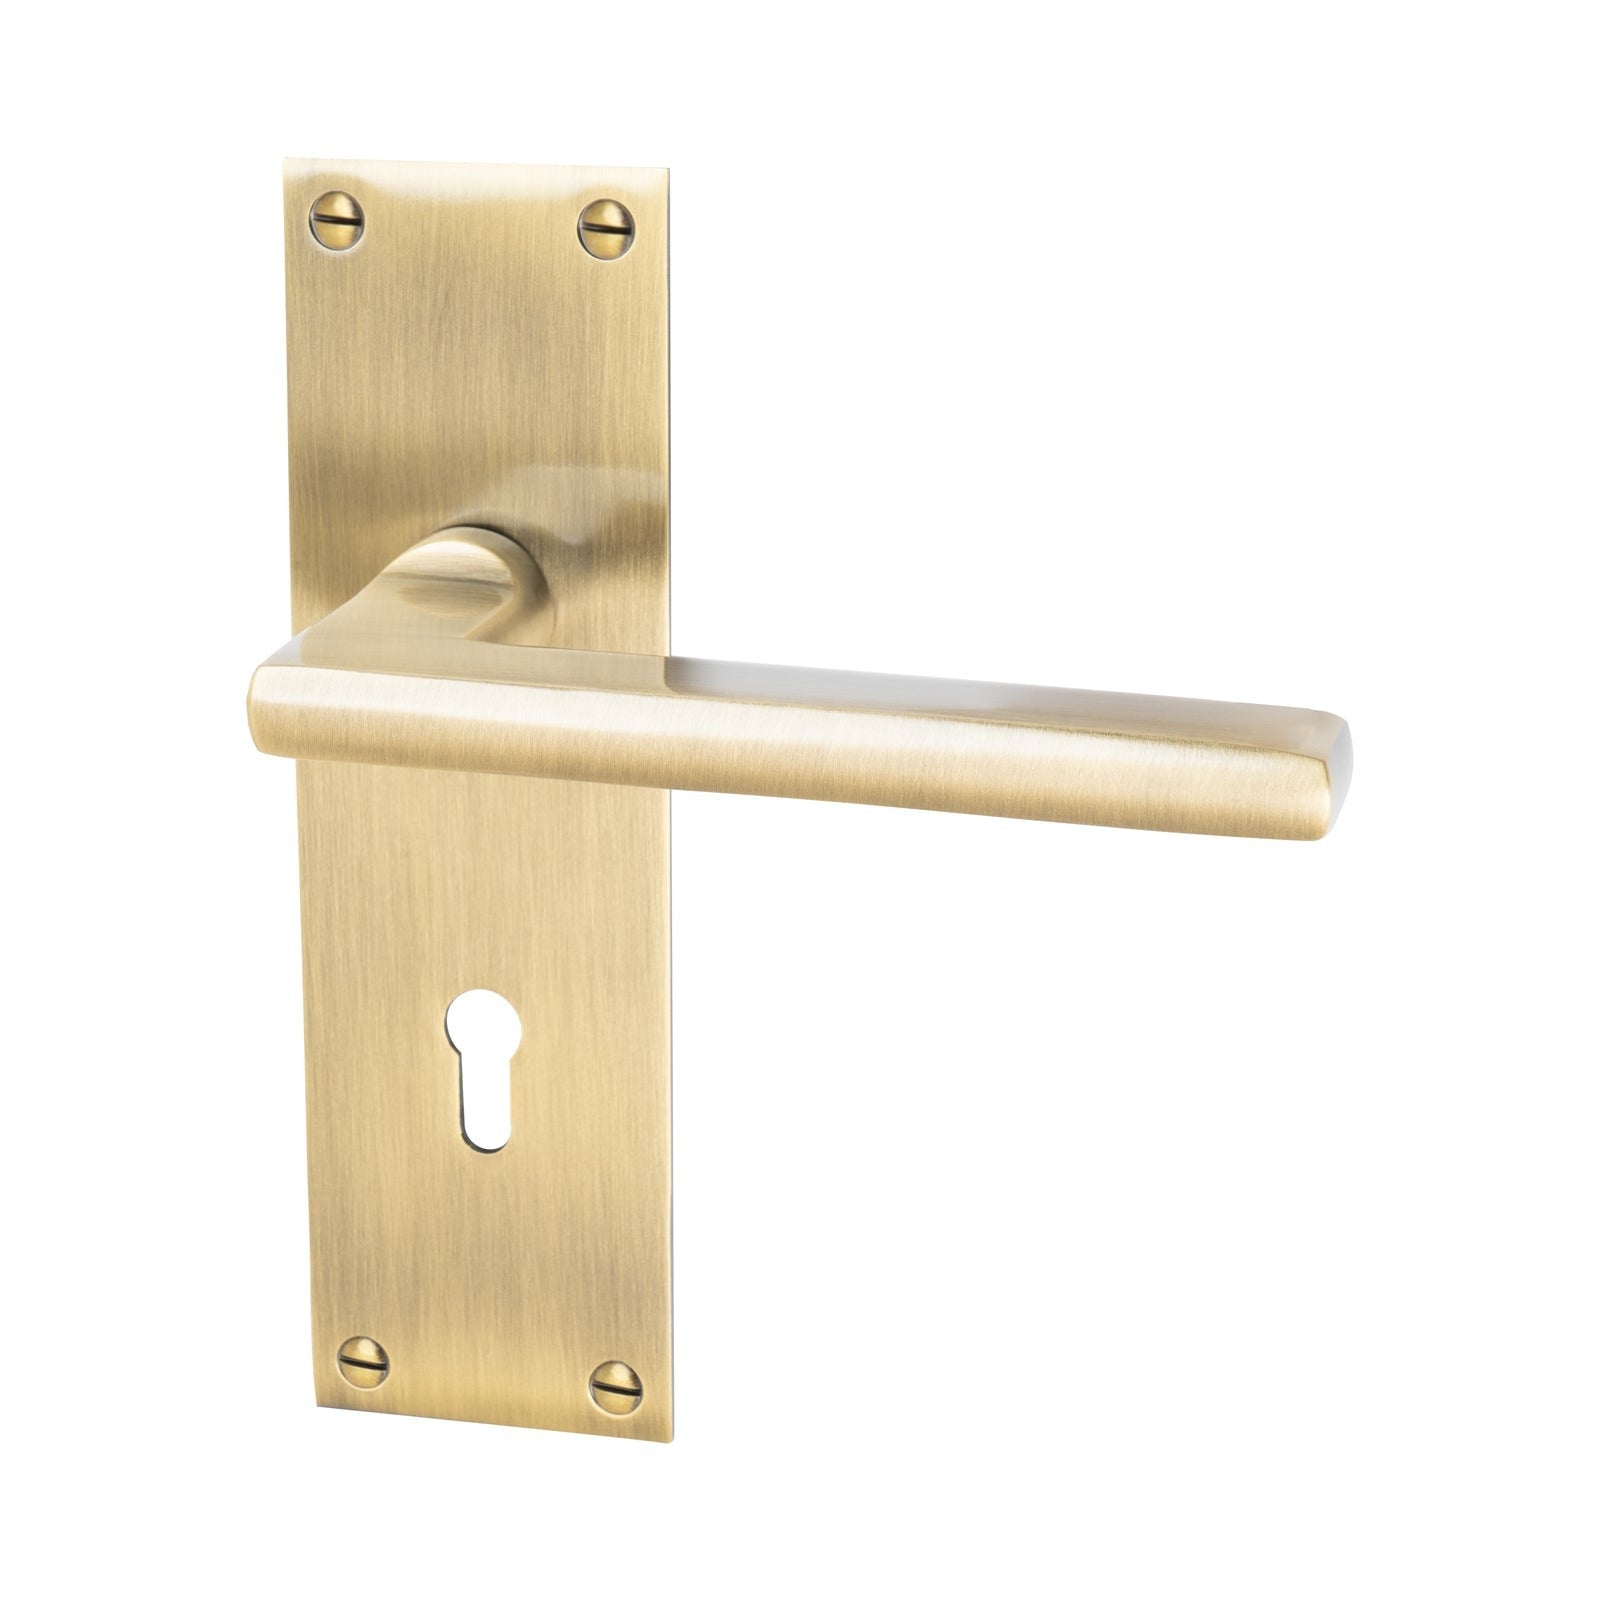 Trident Door Handles On Plate Lock Handle in Aged Brass 